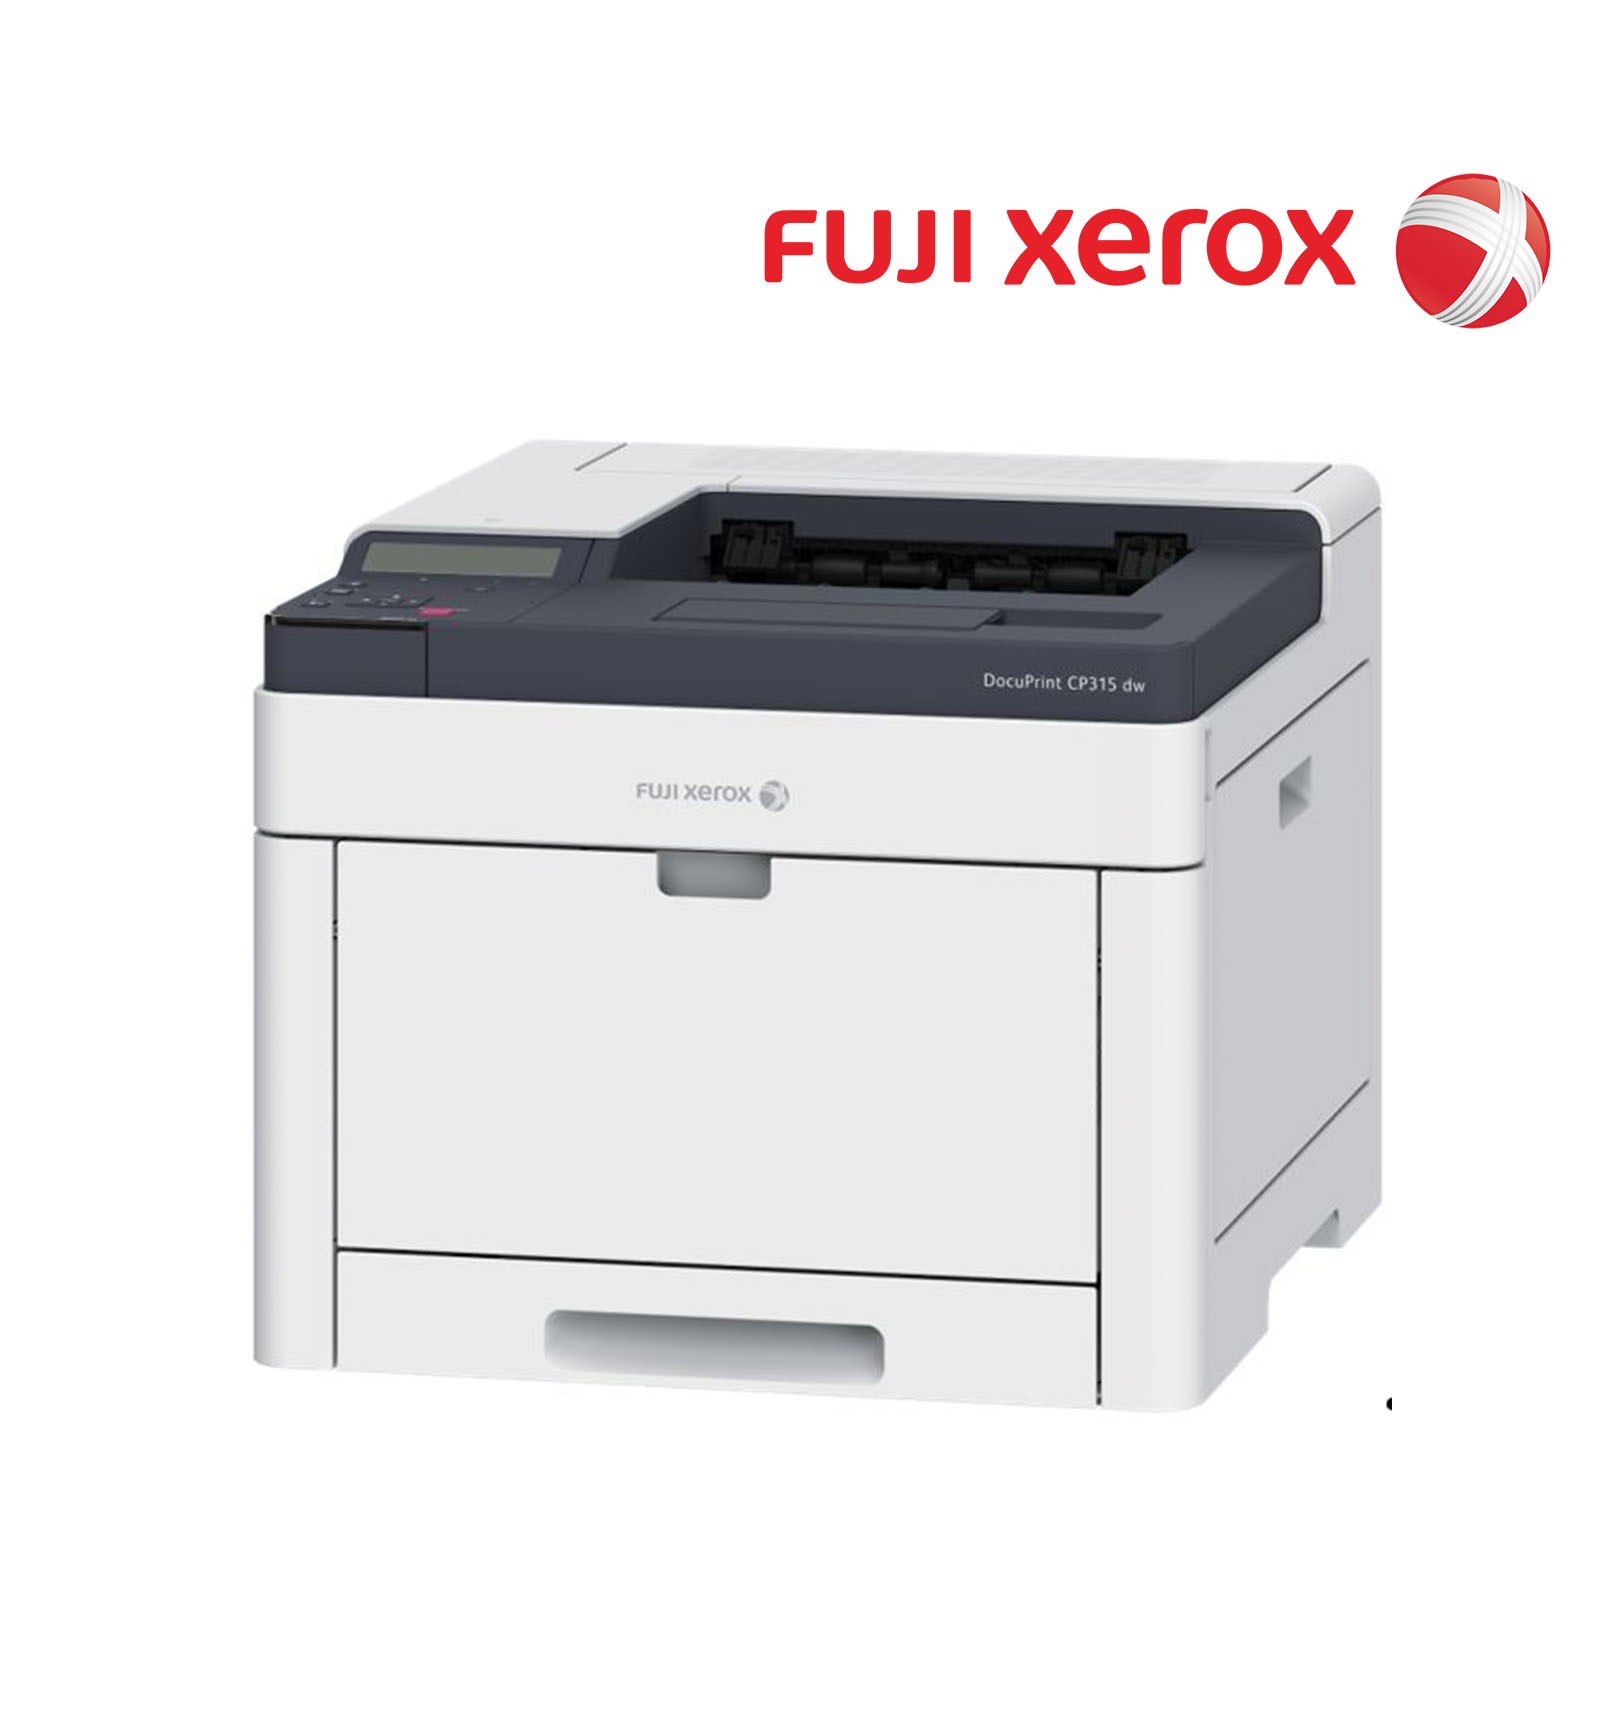 Fuji Xerox DocuPrint CP315 dw Colour Printer